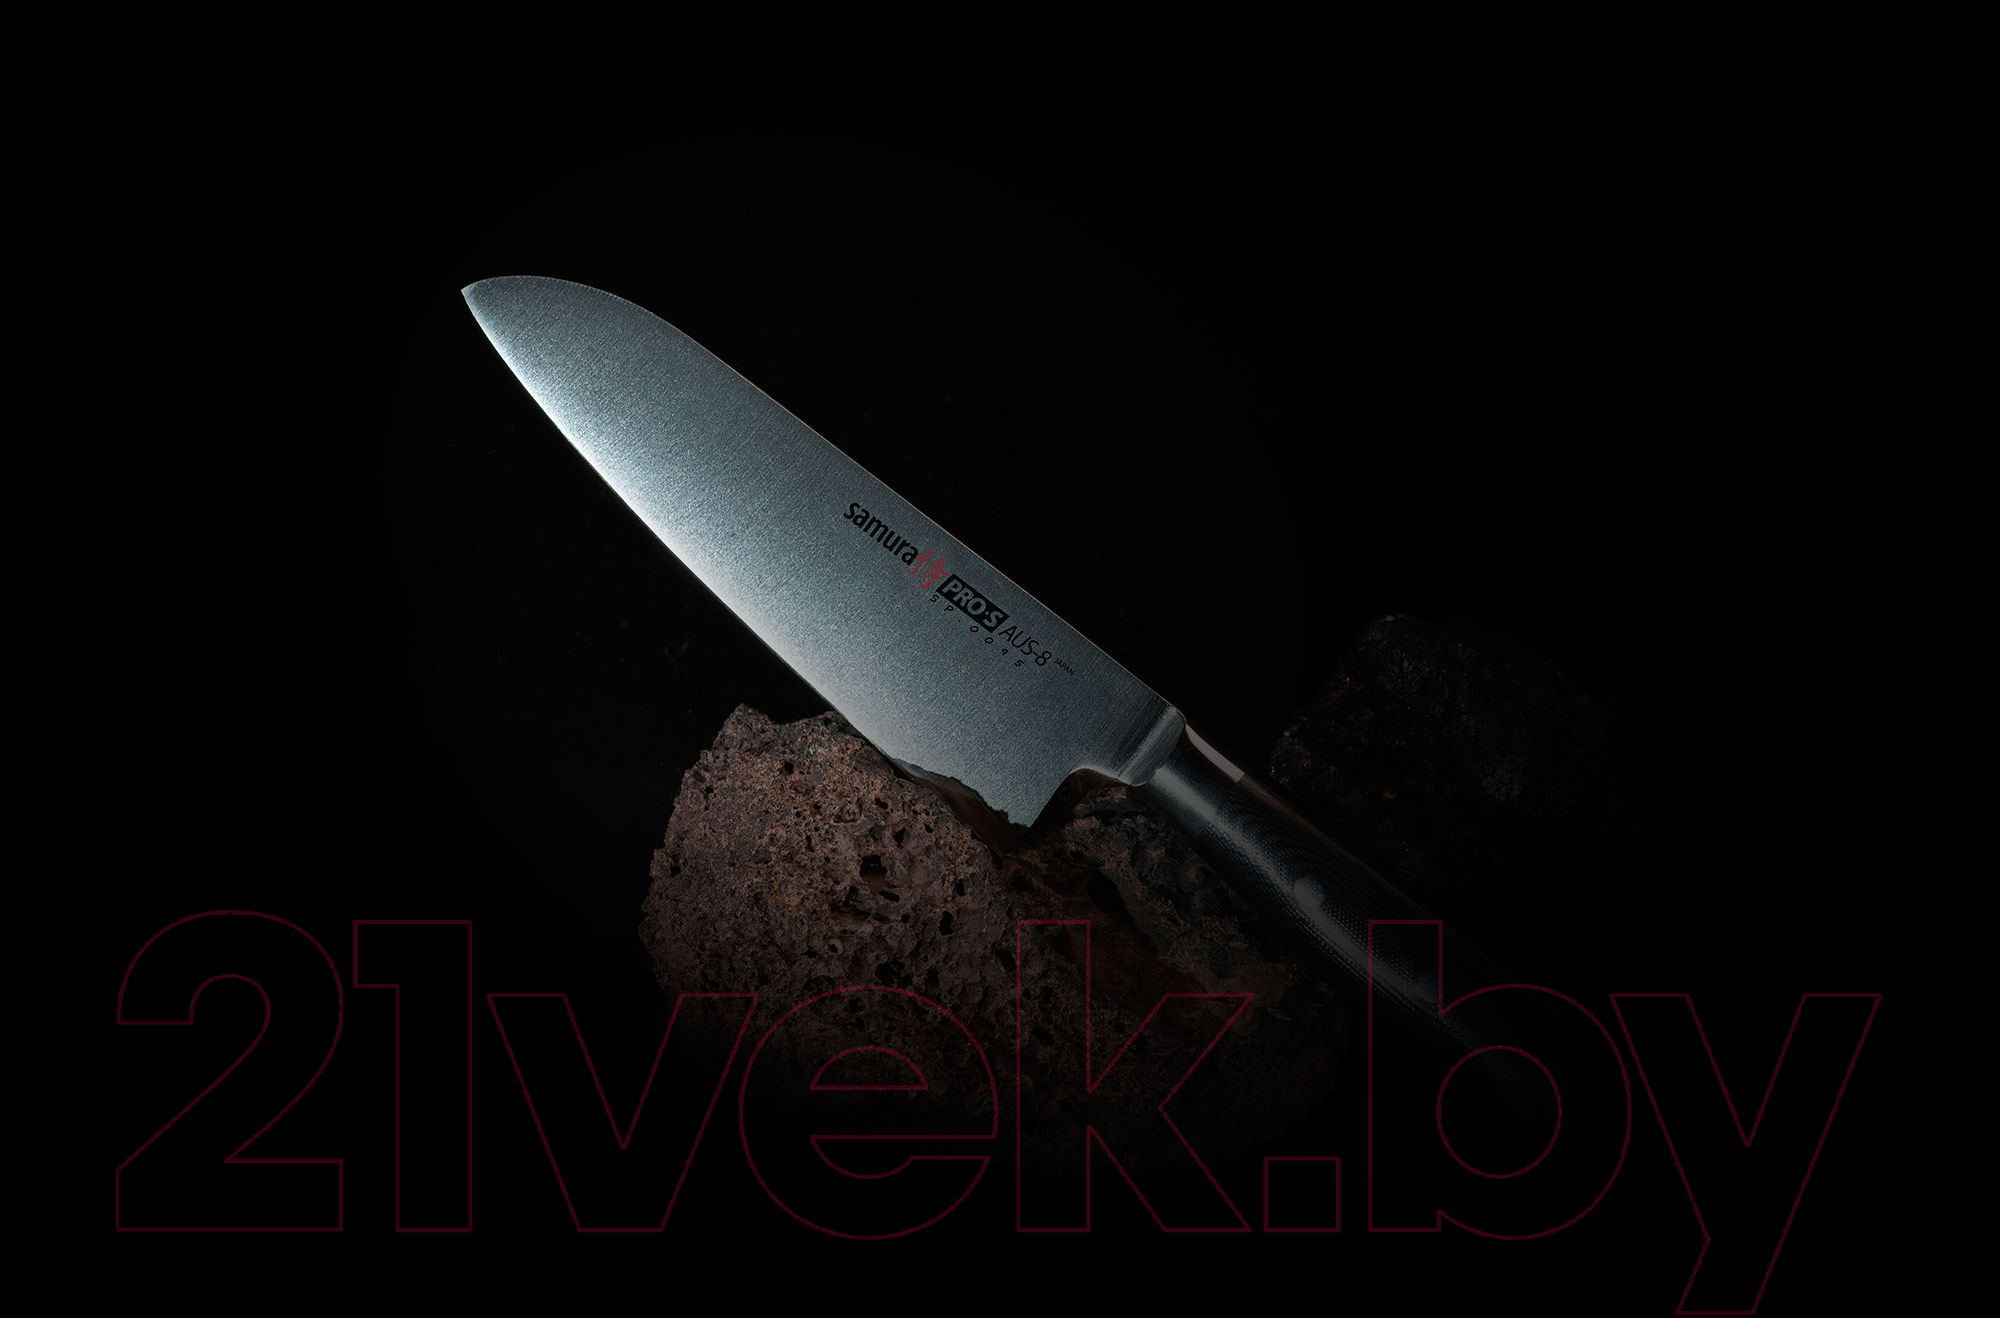 Нож Samura Pro-S SP-0095